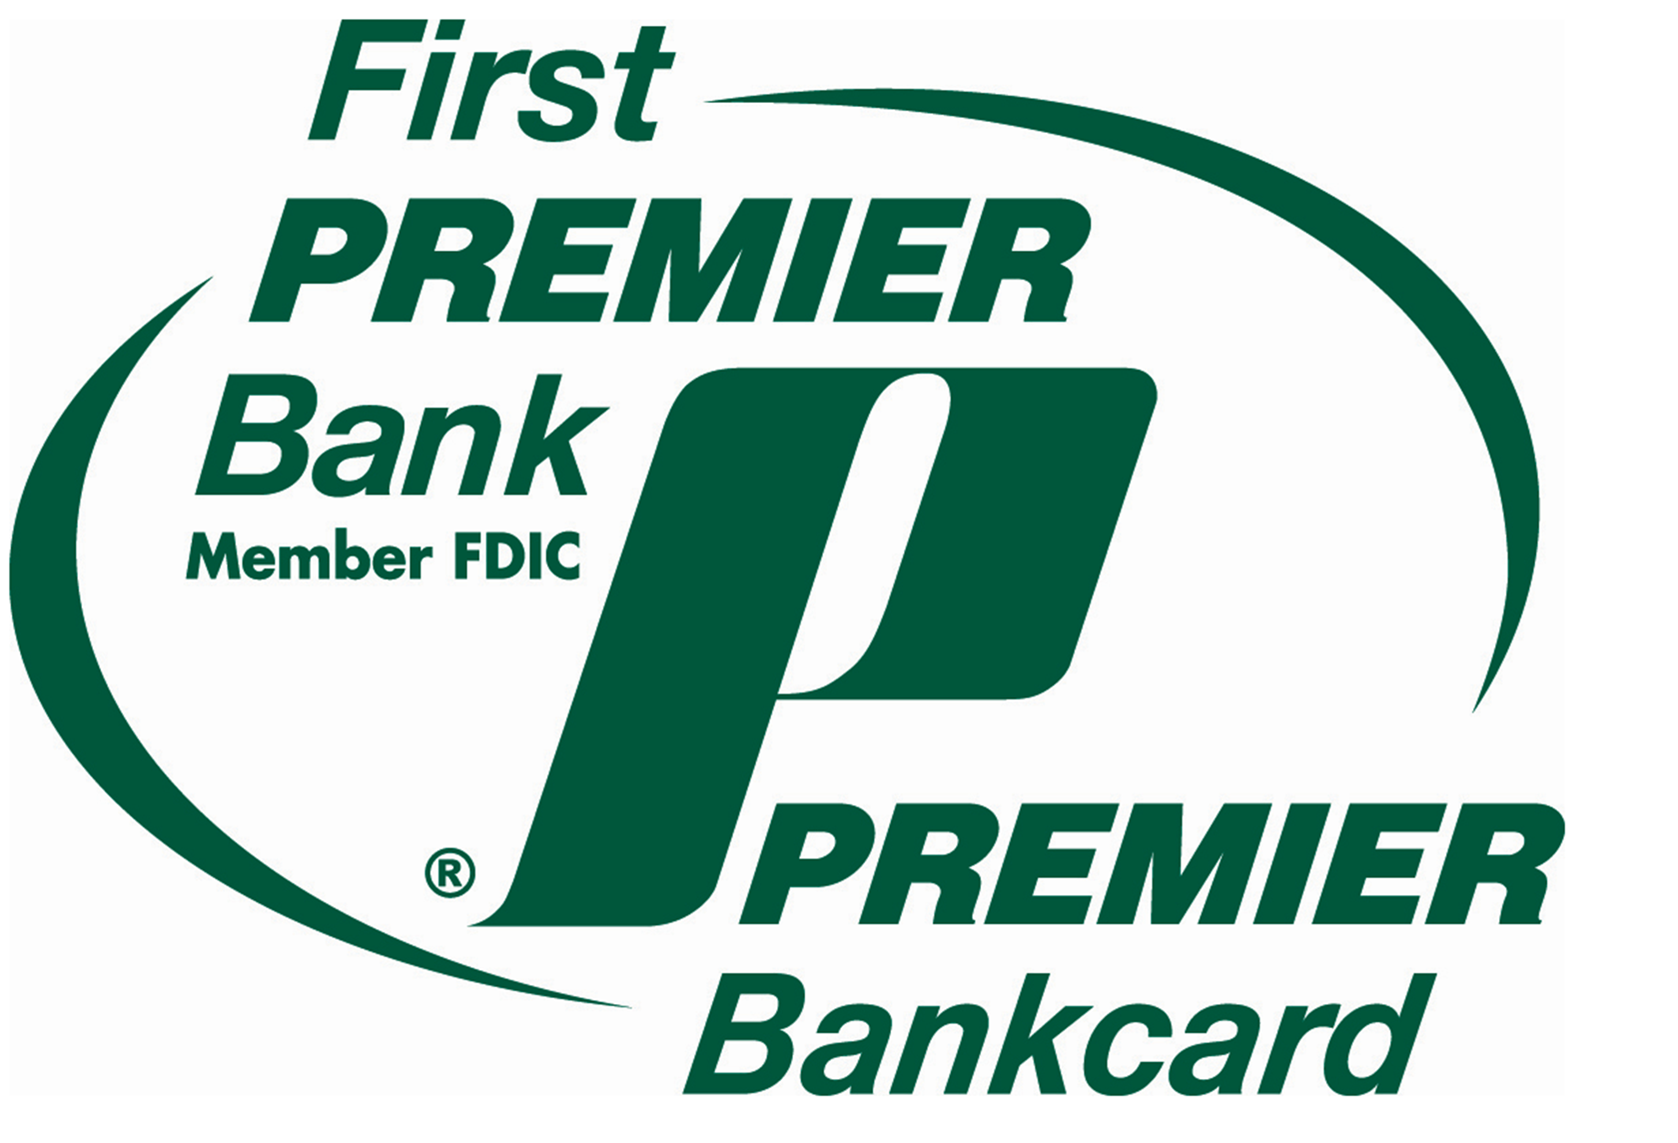 First PREMIER Bank & PREMIER Bankcard